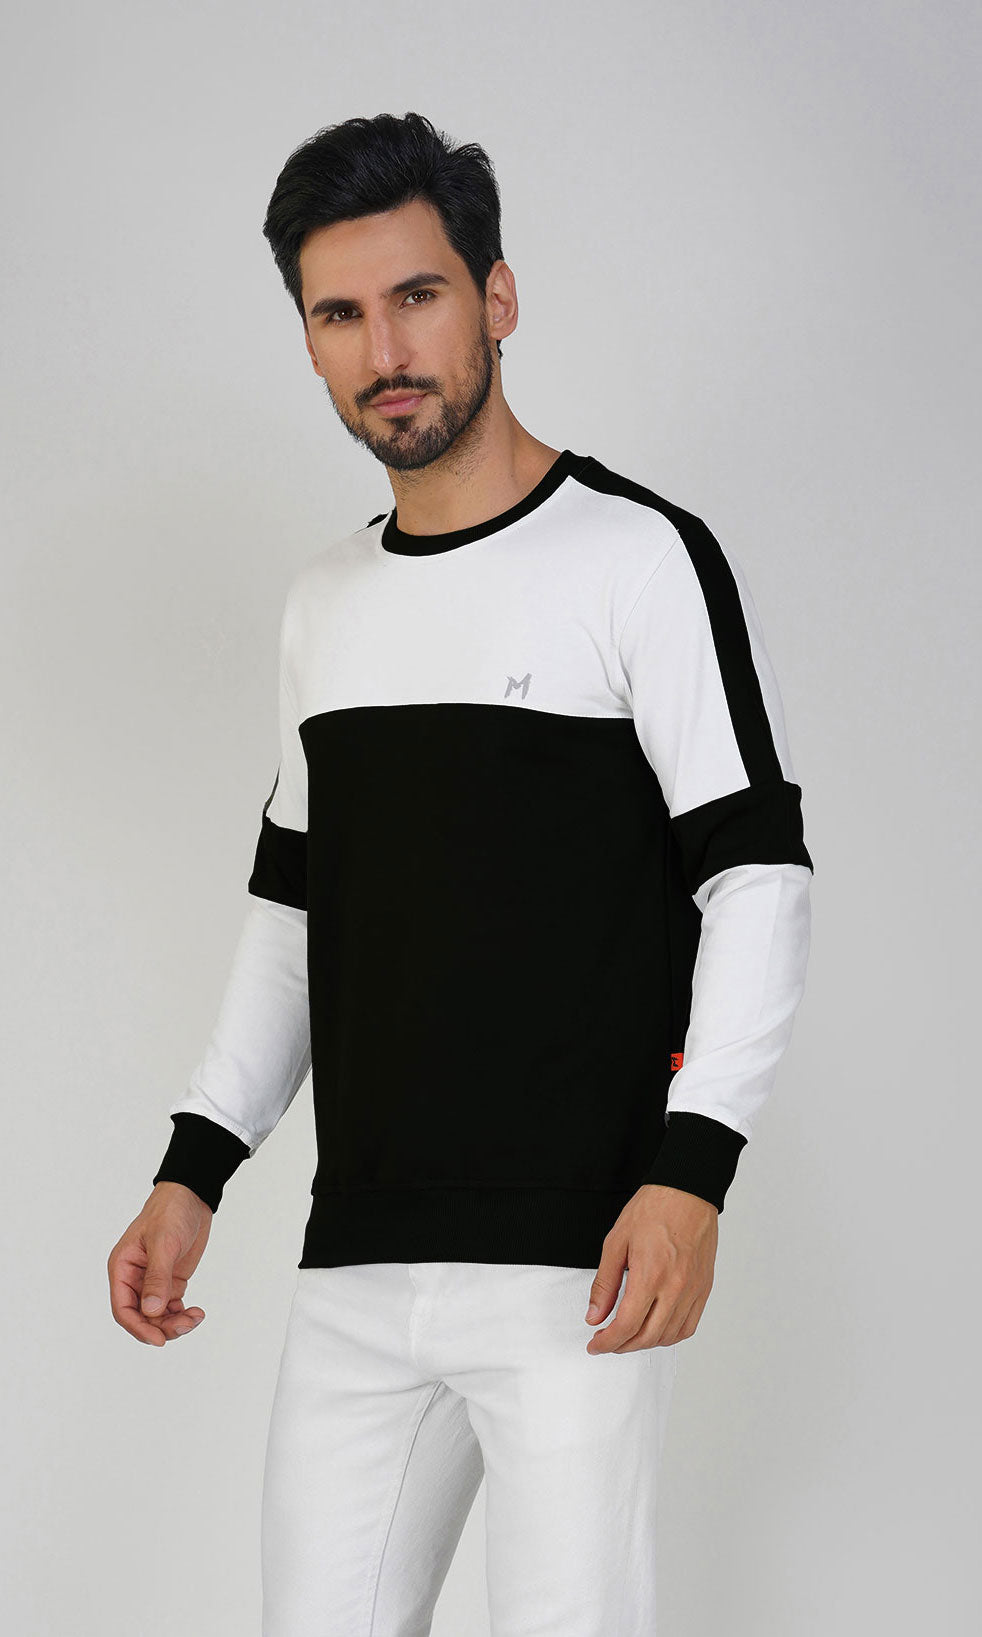 Mebadass Cotton Men's Winterwear ColorBlocked Sweatshirt - White Black Arm